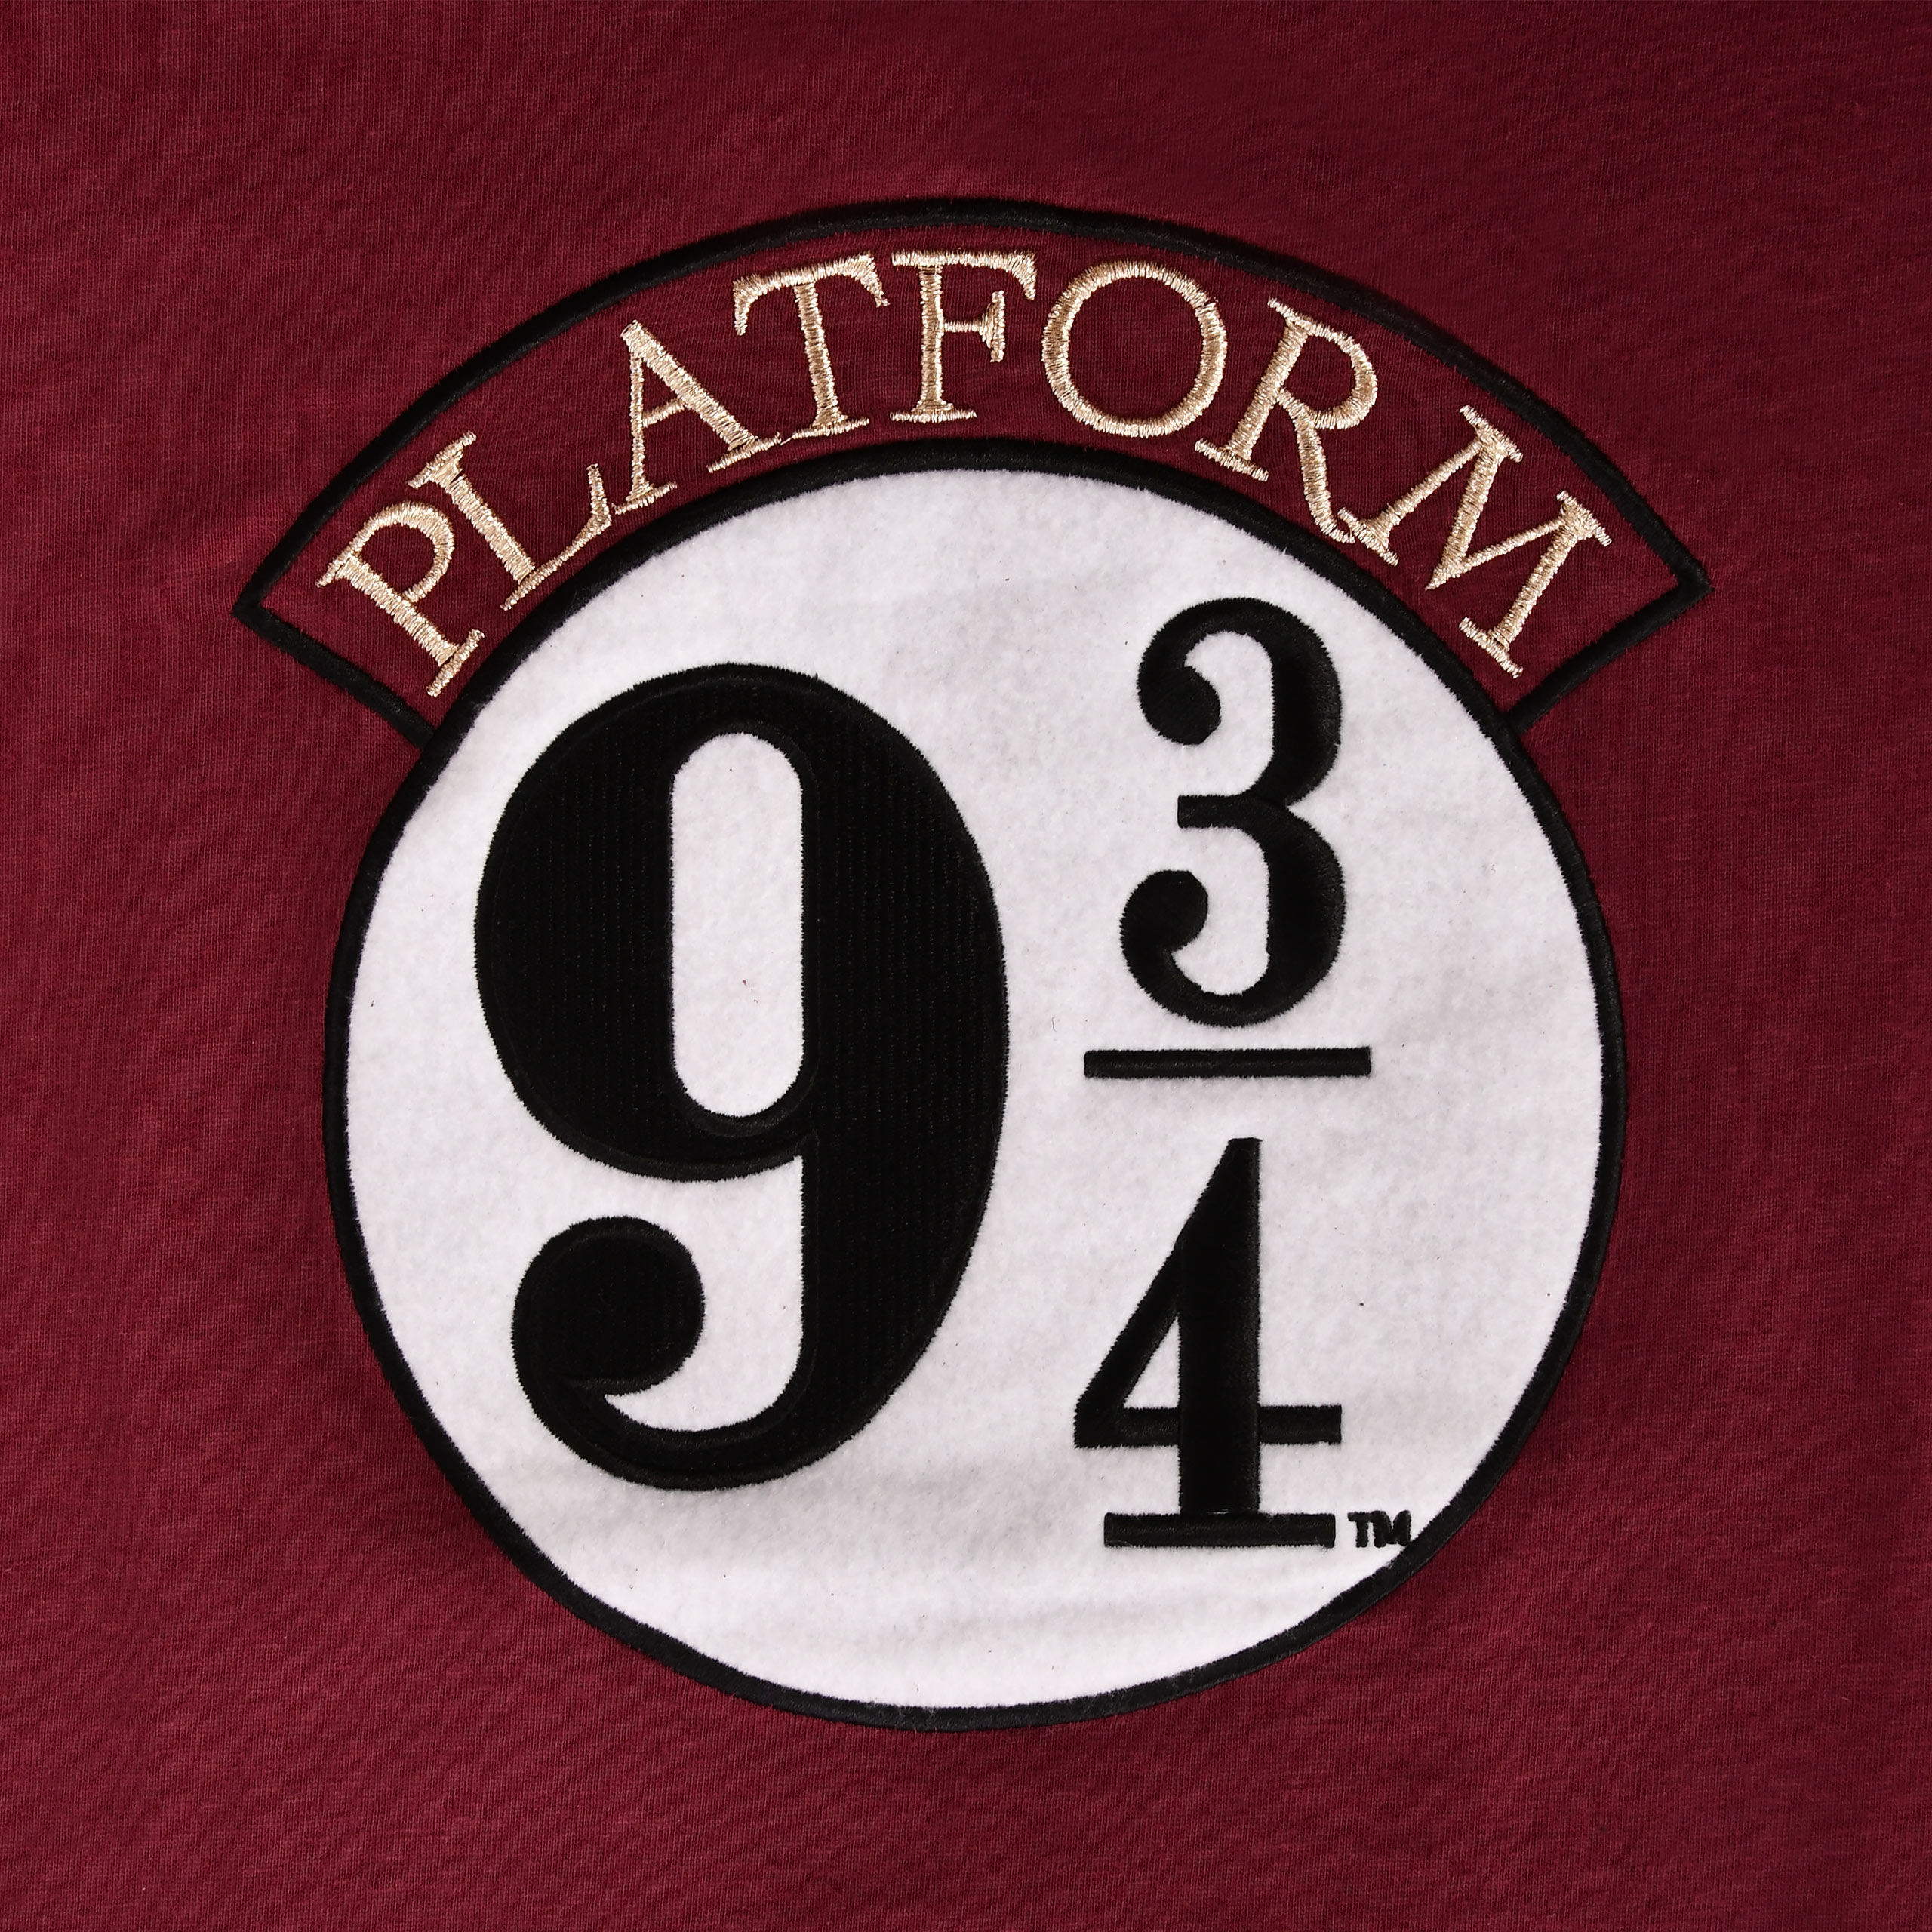 Harry Potter - Gleis 9 3/4 Premium T-Shirt